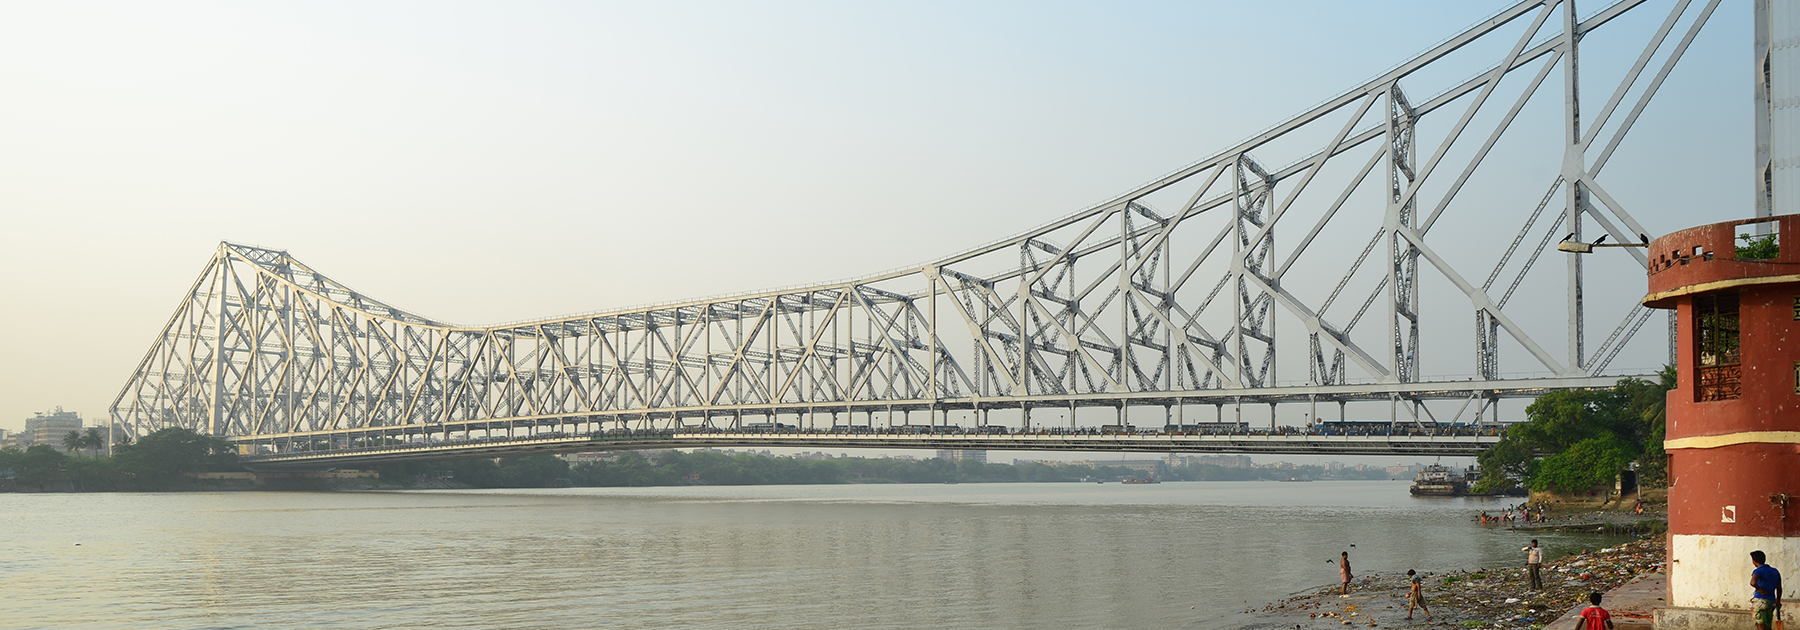 The Howrah Bridge straddles West Bengal's Hooghly River in Kolkata. (Christopher J. Fynn, licensed under CC BY-SA 4.0)